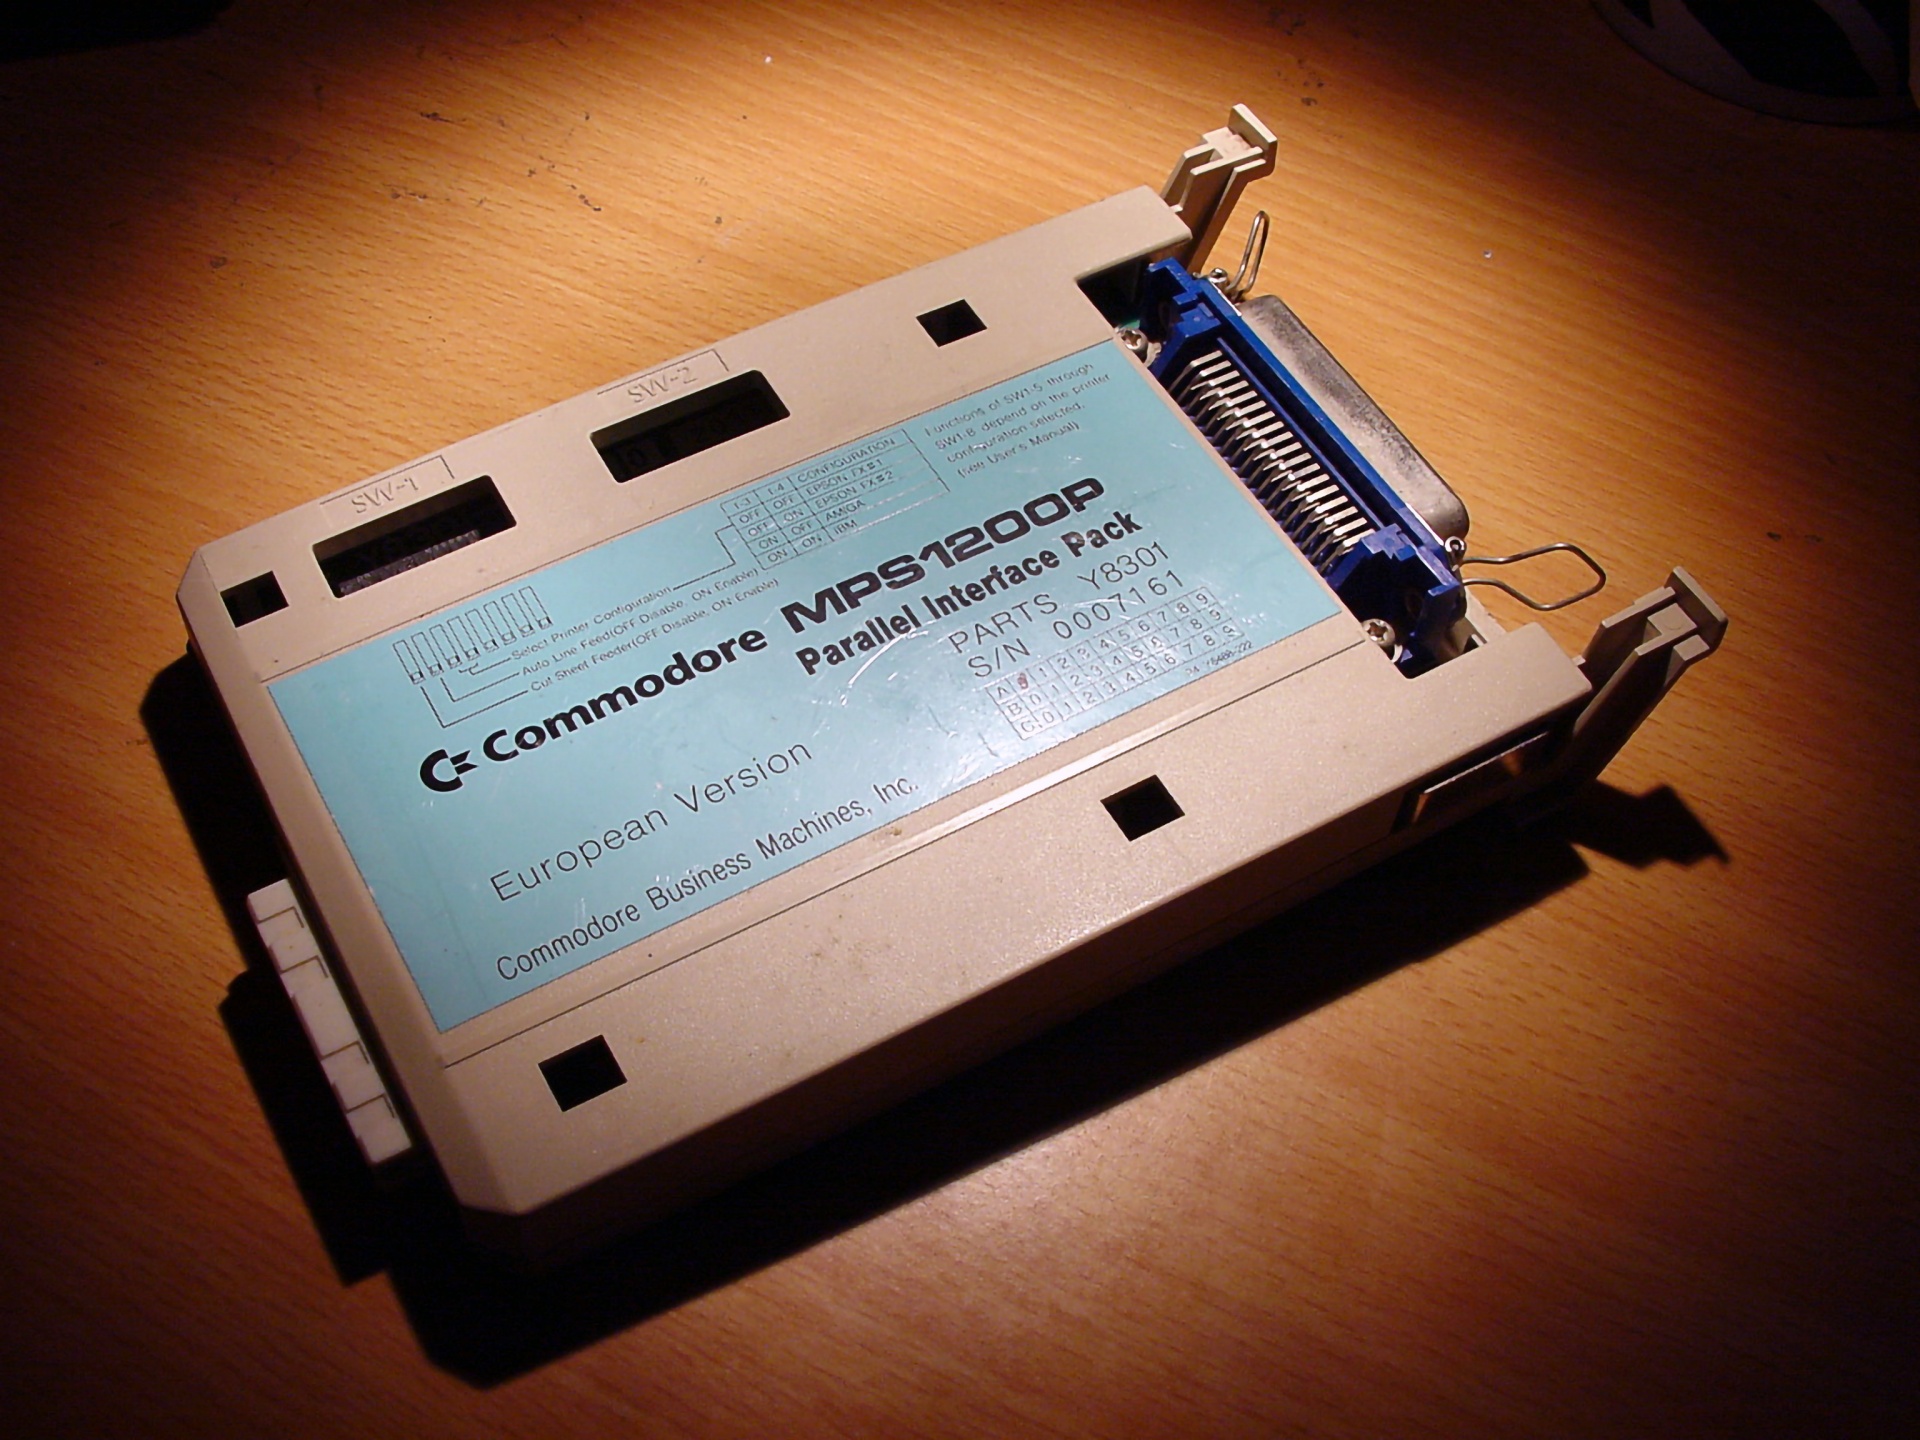 Centronics Printer Cartridge for the Commodore MPS 1200 Printer